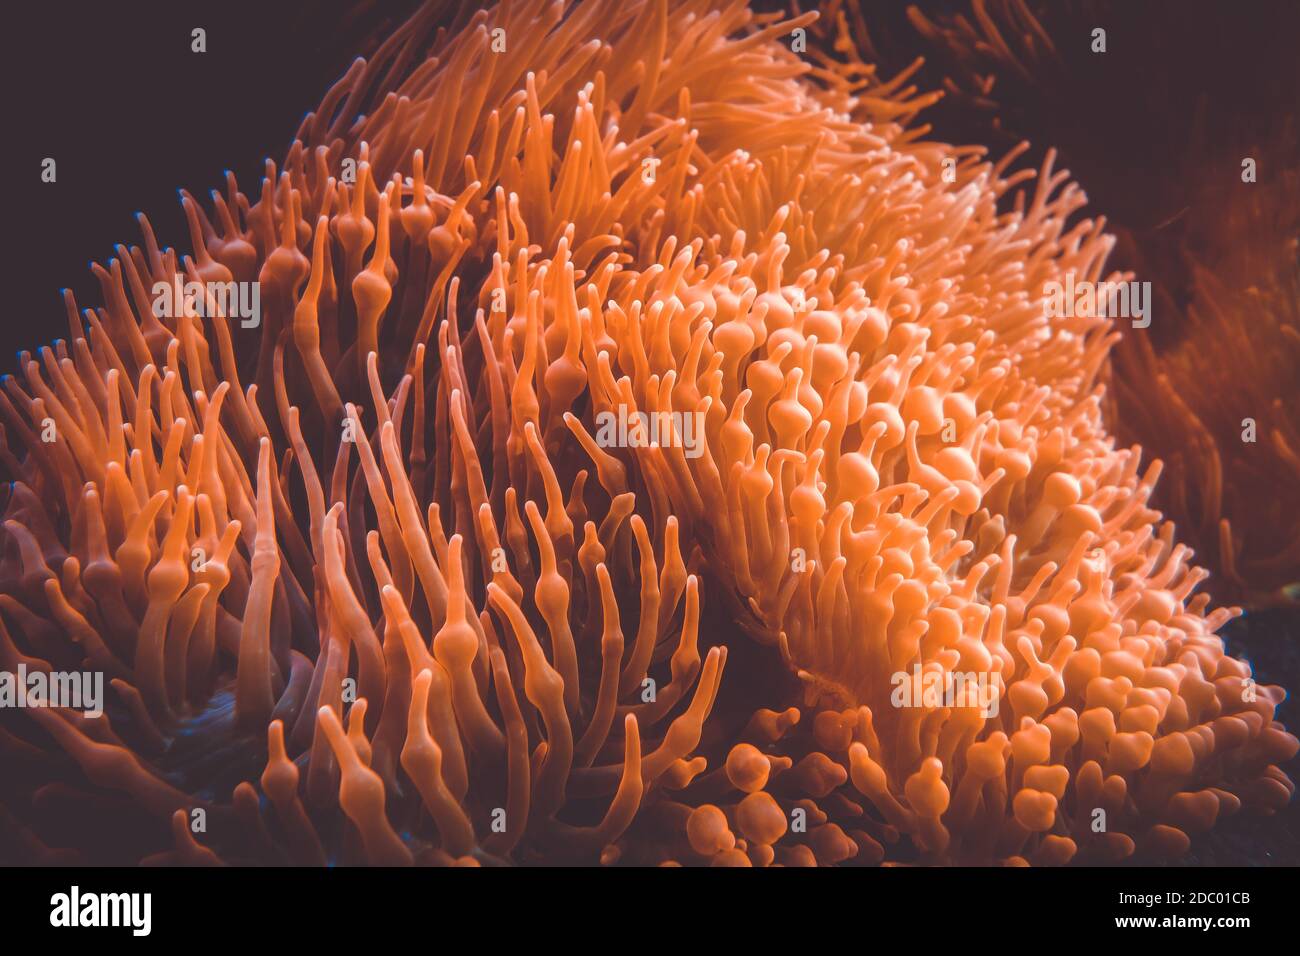 Sea anemone close-up view in ocean. Heteractis magnifica Stock Photo